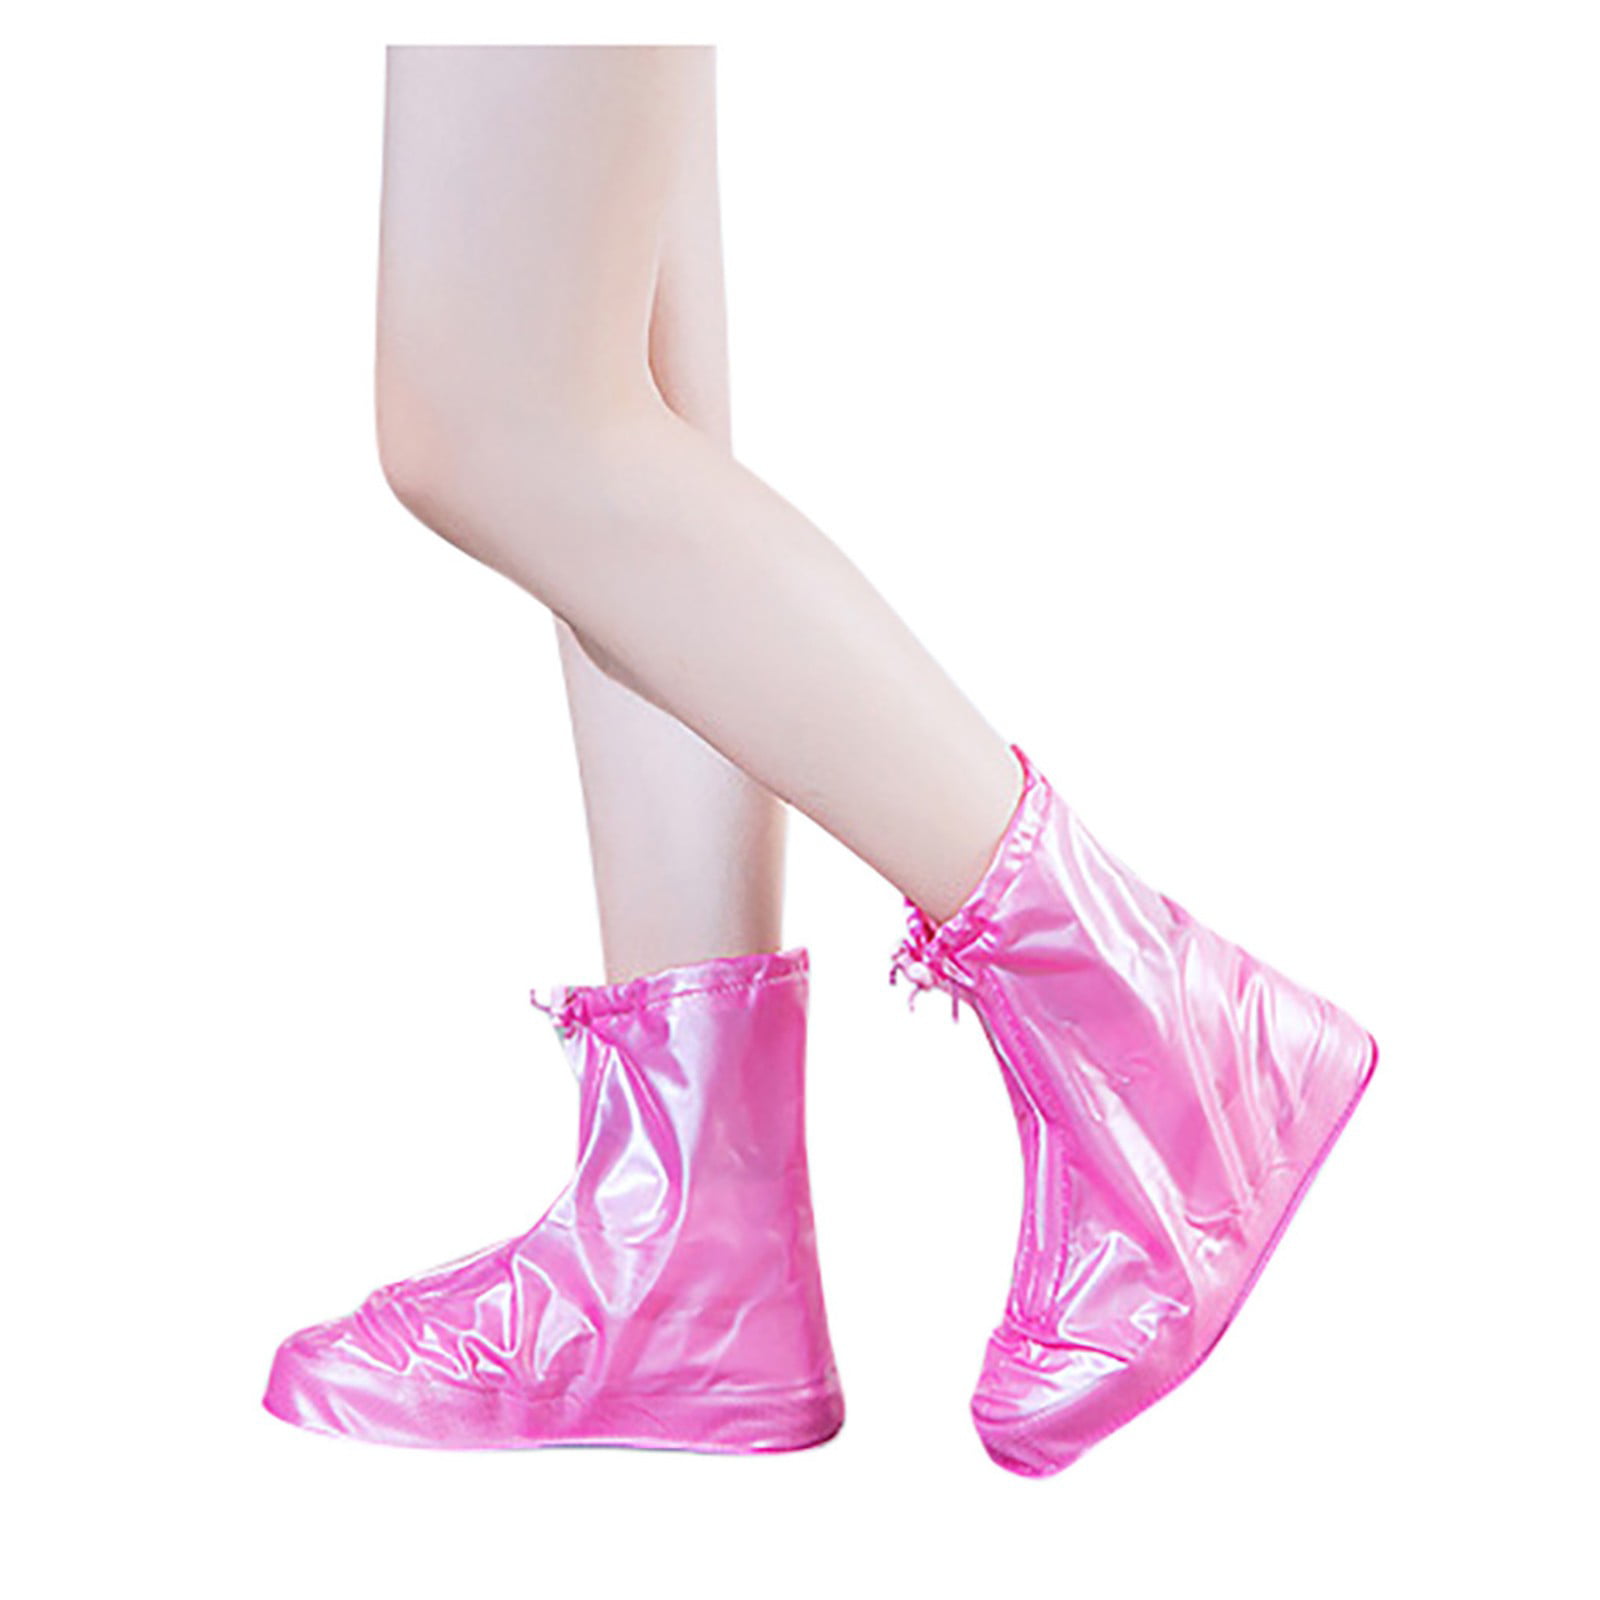 NEW Waterproof Overshoes Rain Boots Shoes Covers Overshoe Raincoats W 